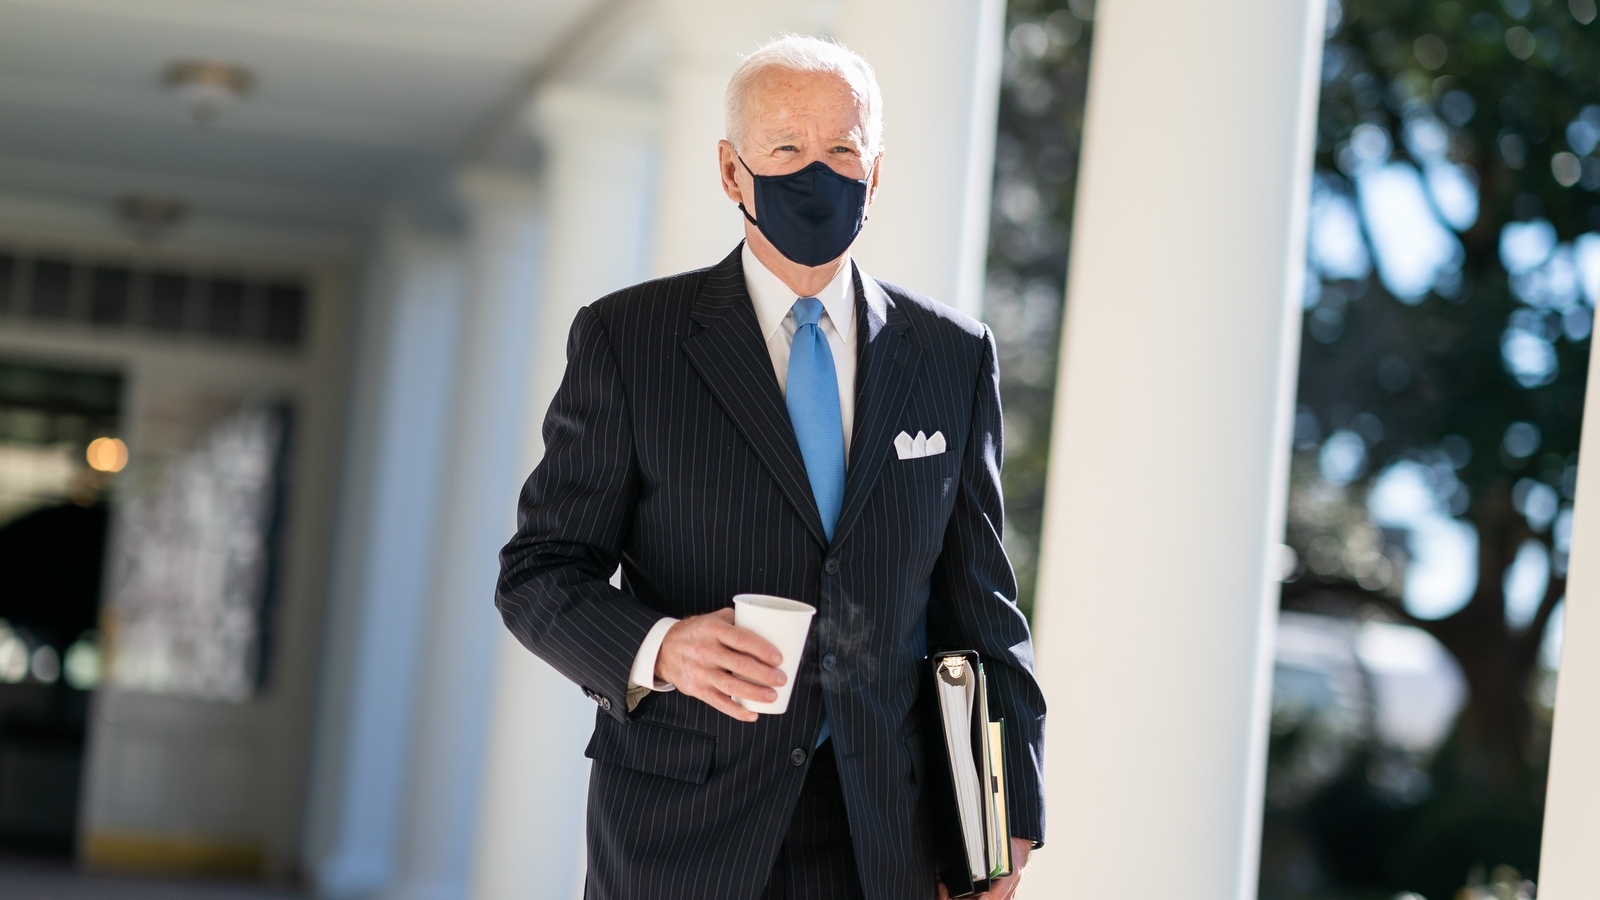 Biden walking outside with mask on